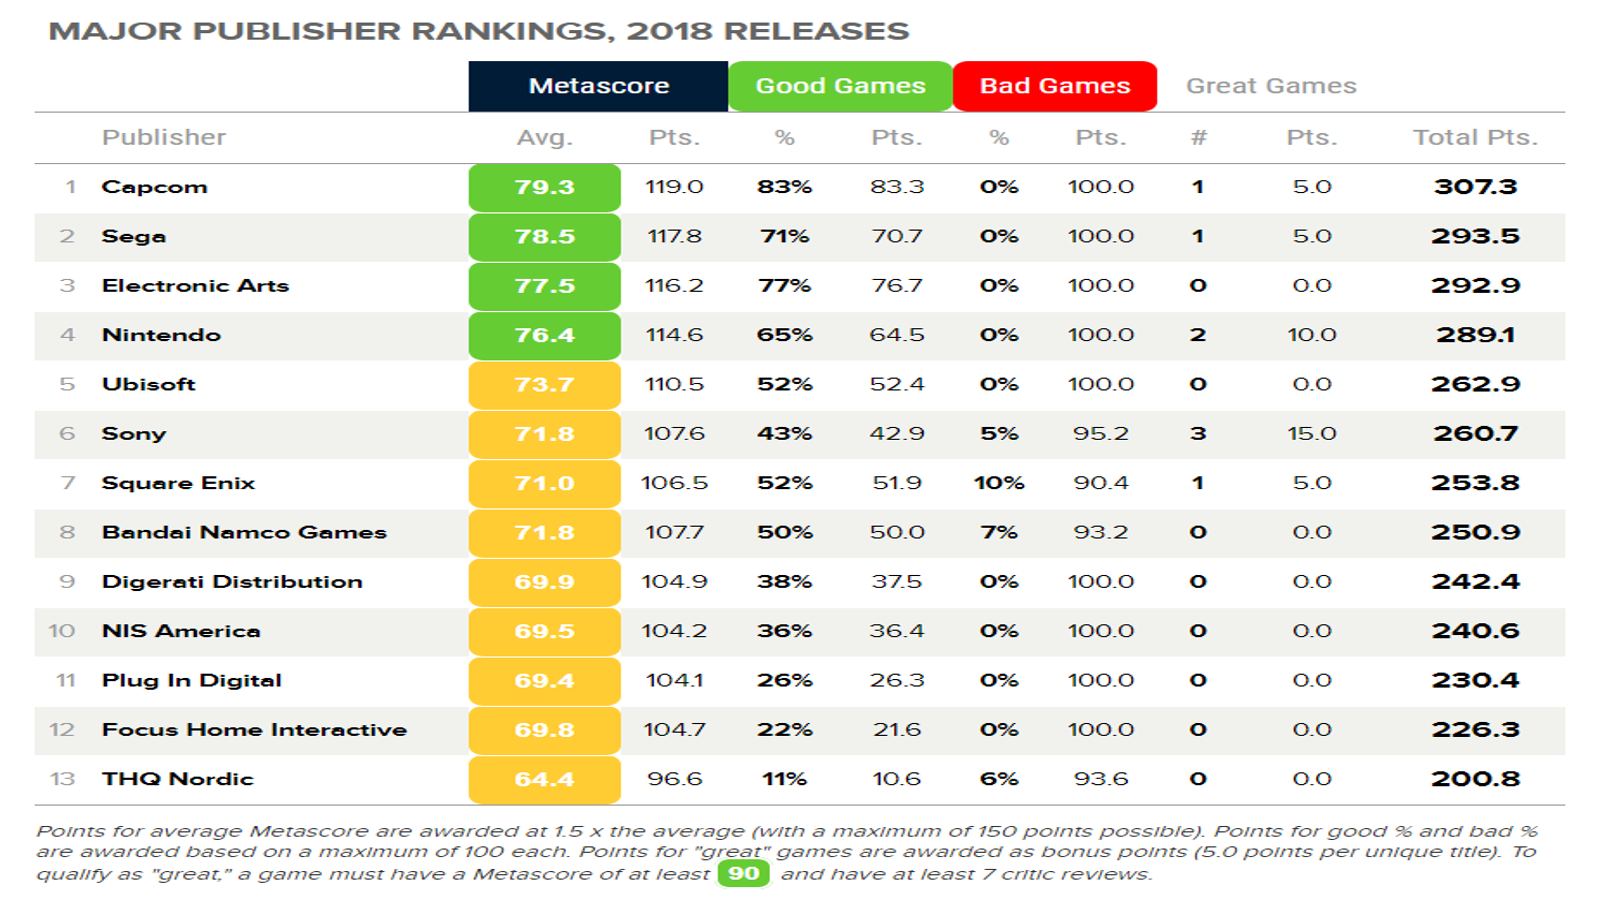 metacritic on X: Metacritic's 2022 Game Publisher Rankings: https